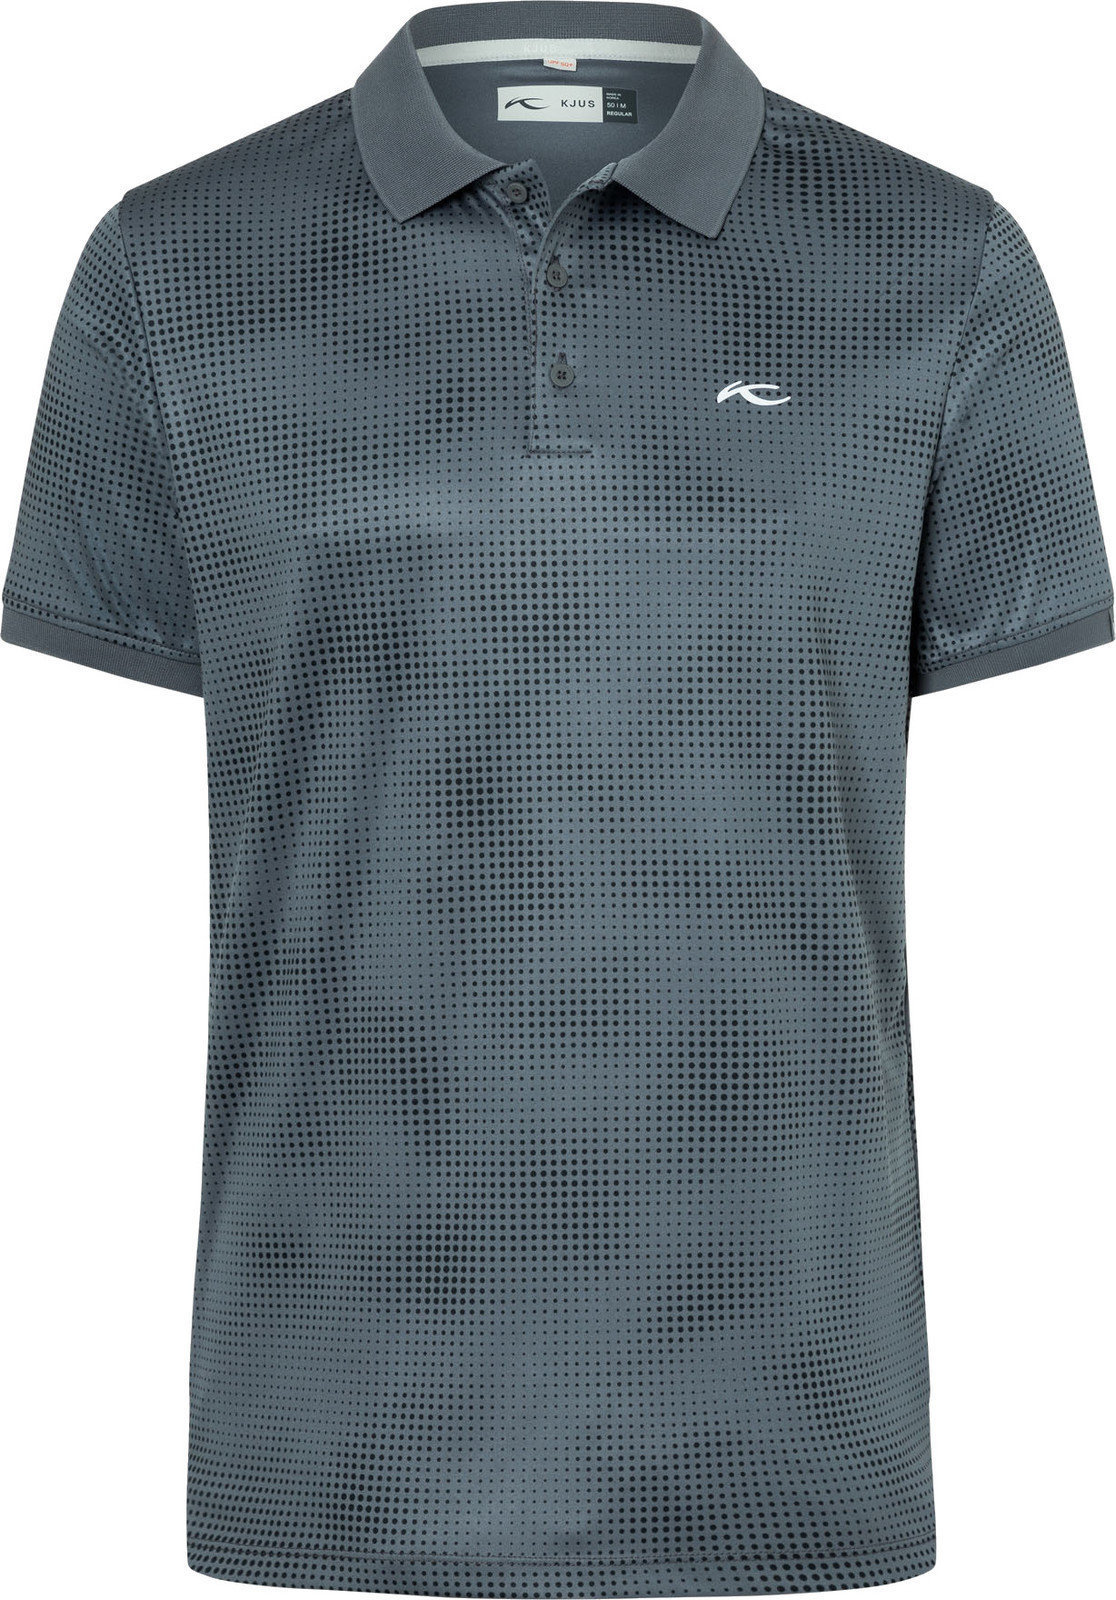 Polo Shirt Kjus Spot Printed Steel Grey 56